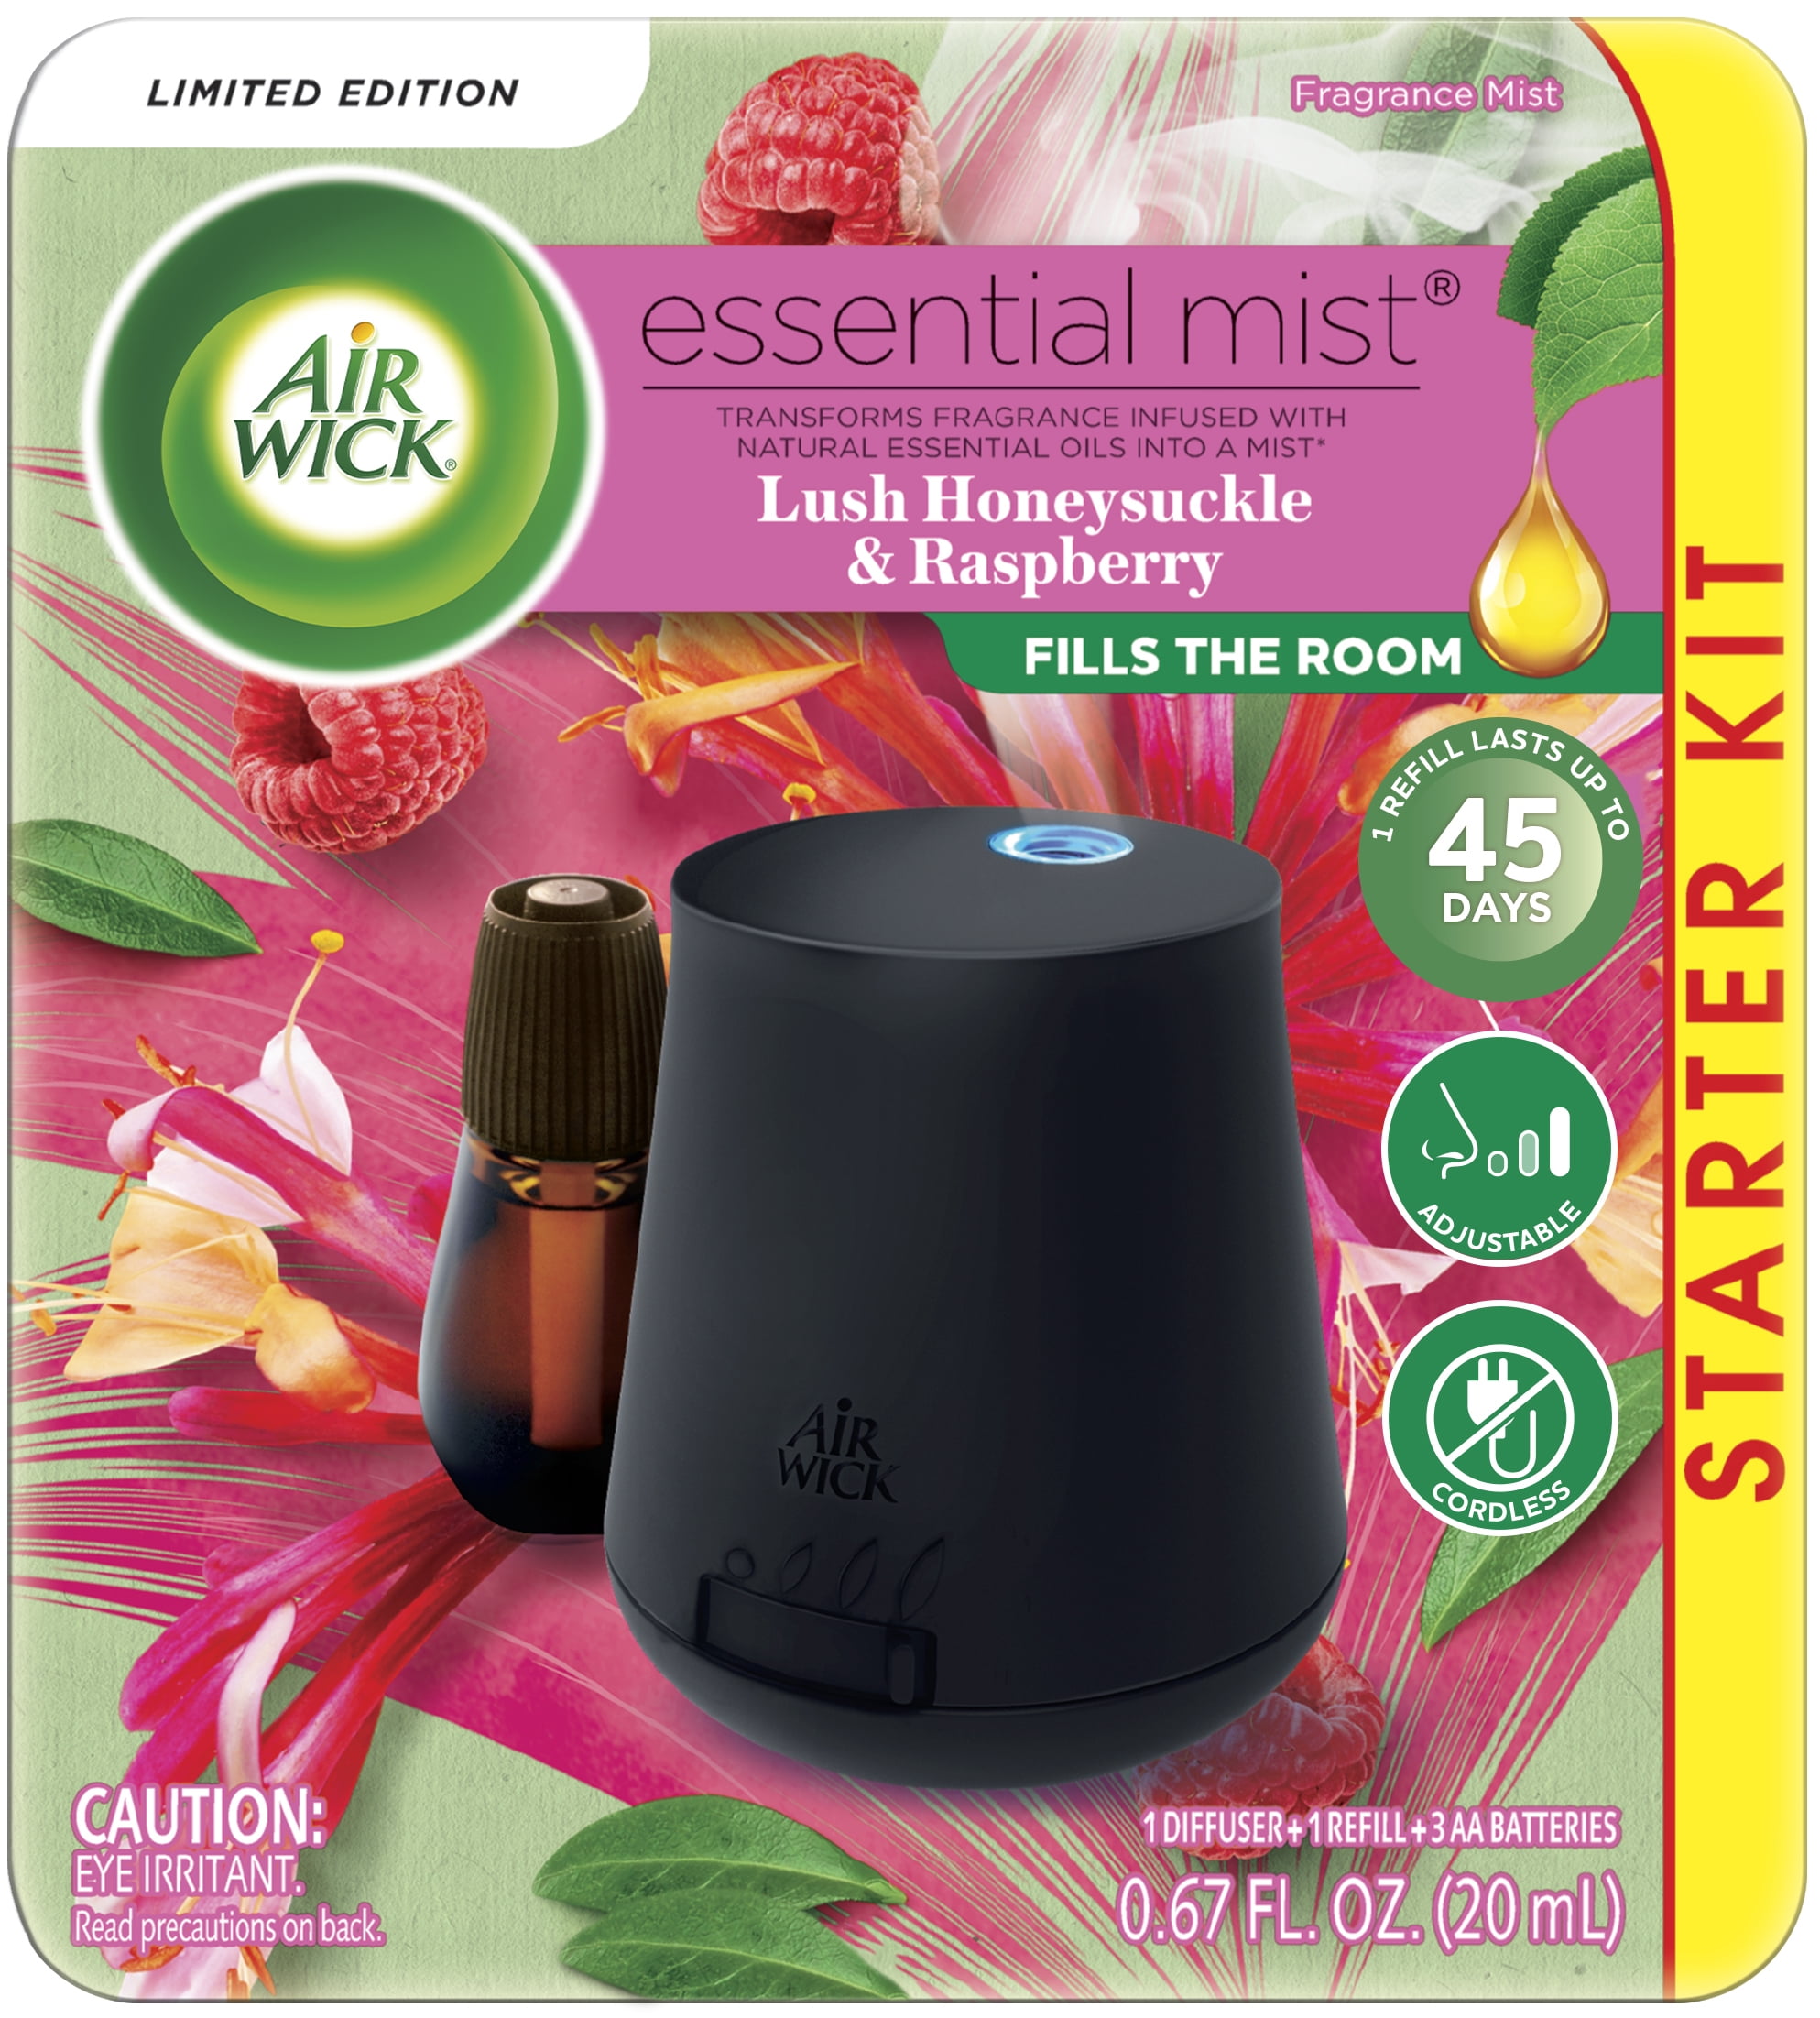 Air Wick Essential Mist Starter Kit (Diffuser + Refill), Lush Honeysuckle & Raspberry, Essential Oils Diffuser, Air Freshener